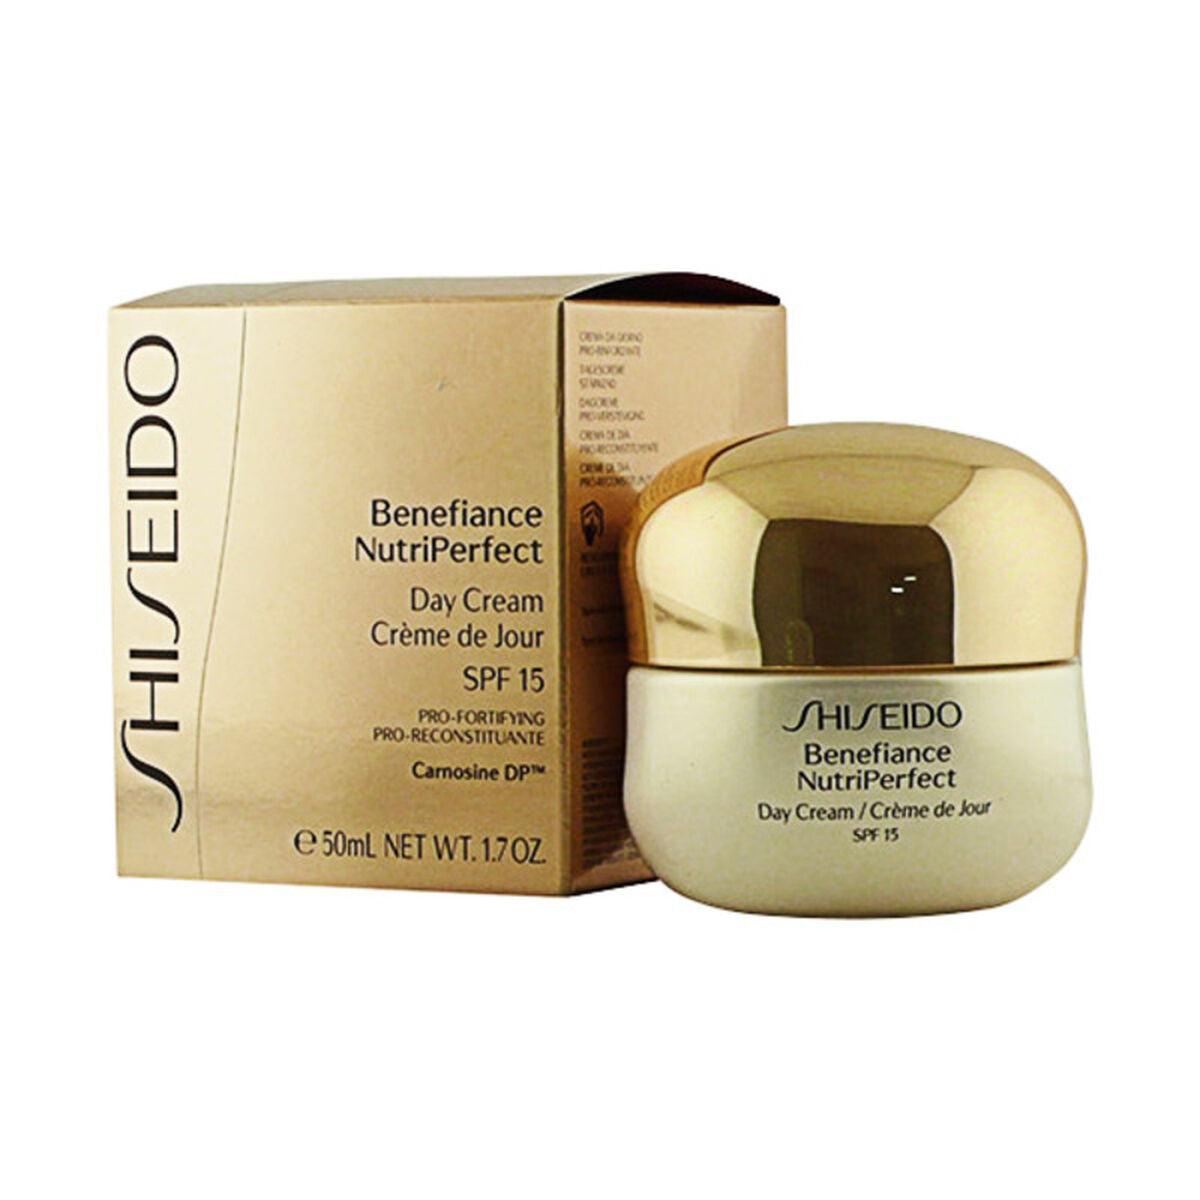 Benefiance Nutriperfect Day Shiseido (50 ml)